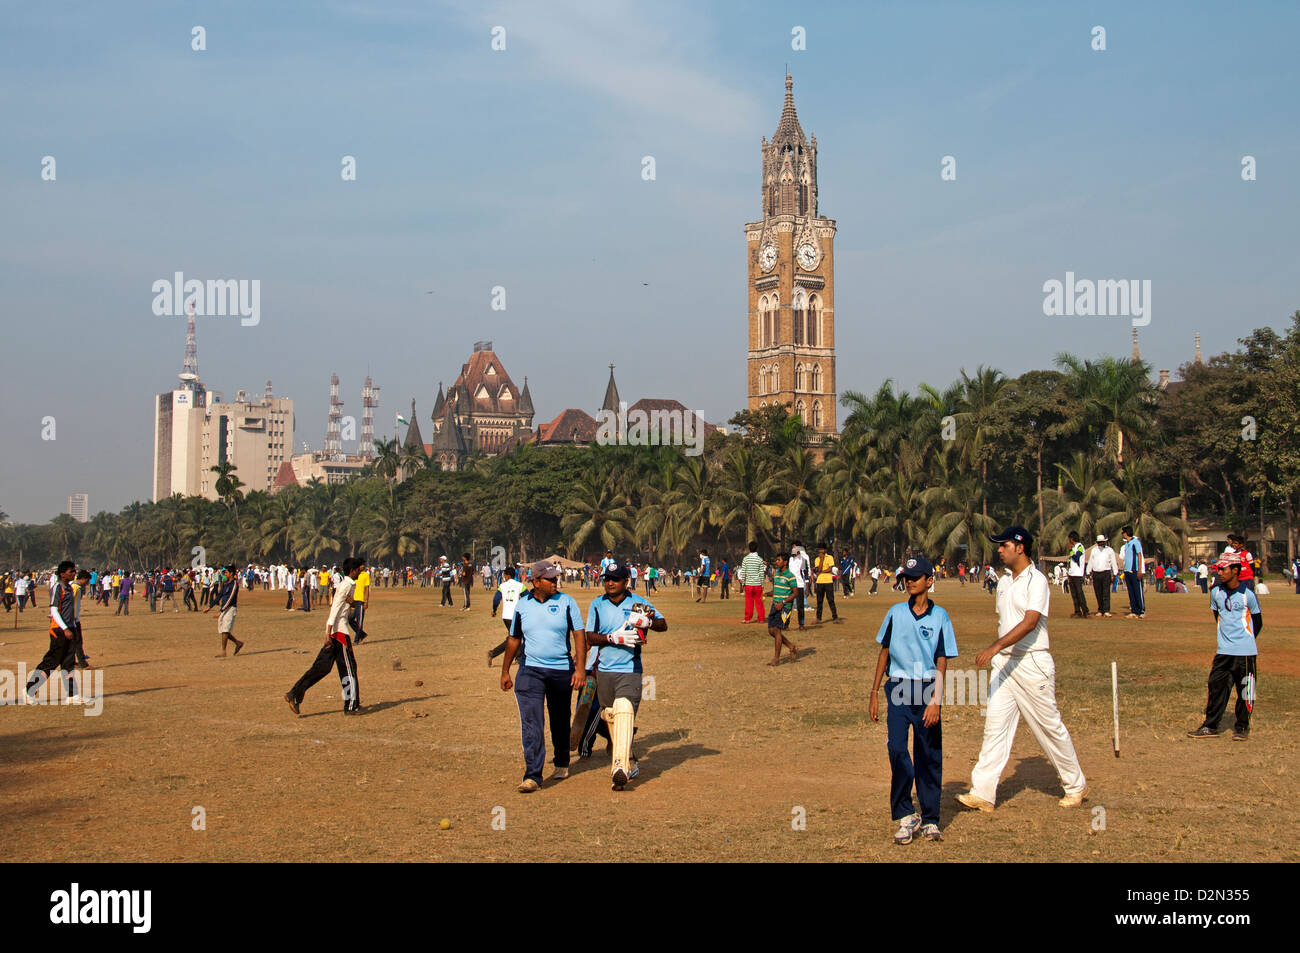 Wochenende-Cricket Spiele Maidan Park Mumbai Churchgate Bombay Indien Hintergrund Universität von Mumbai und Rajabai Clock tower Stockfoto